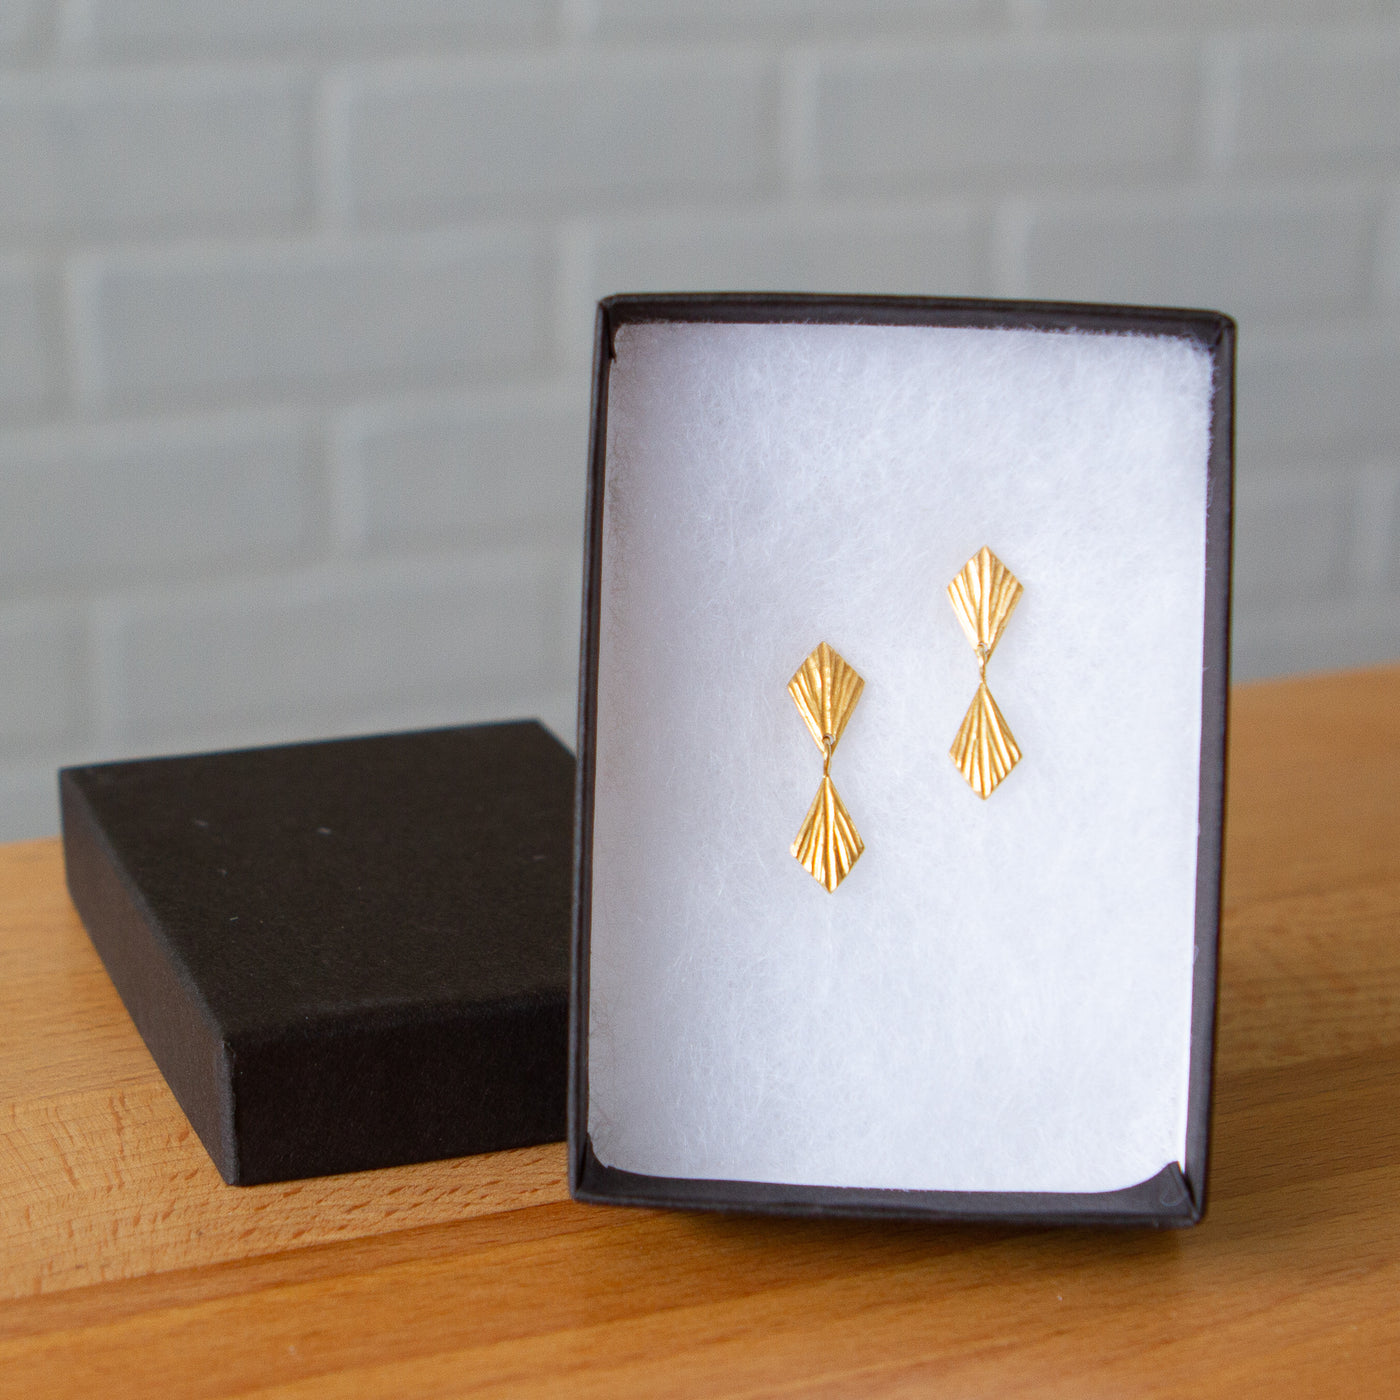 Double Flame Vermeil Dangle Earrings in a gift box